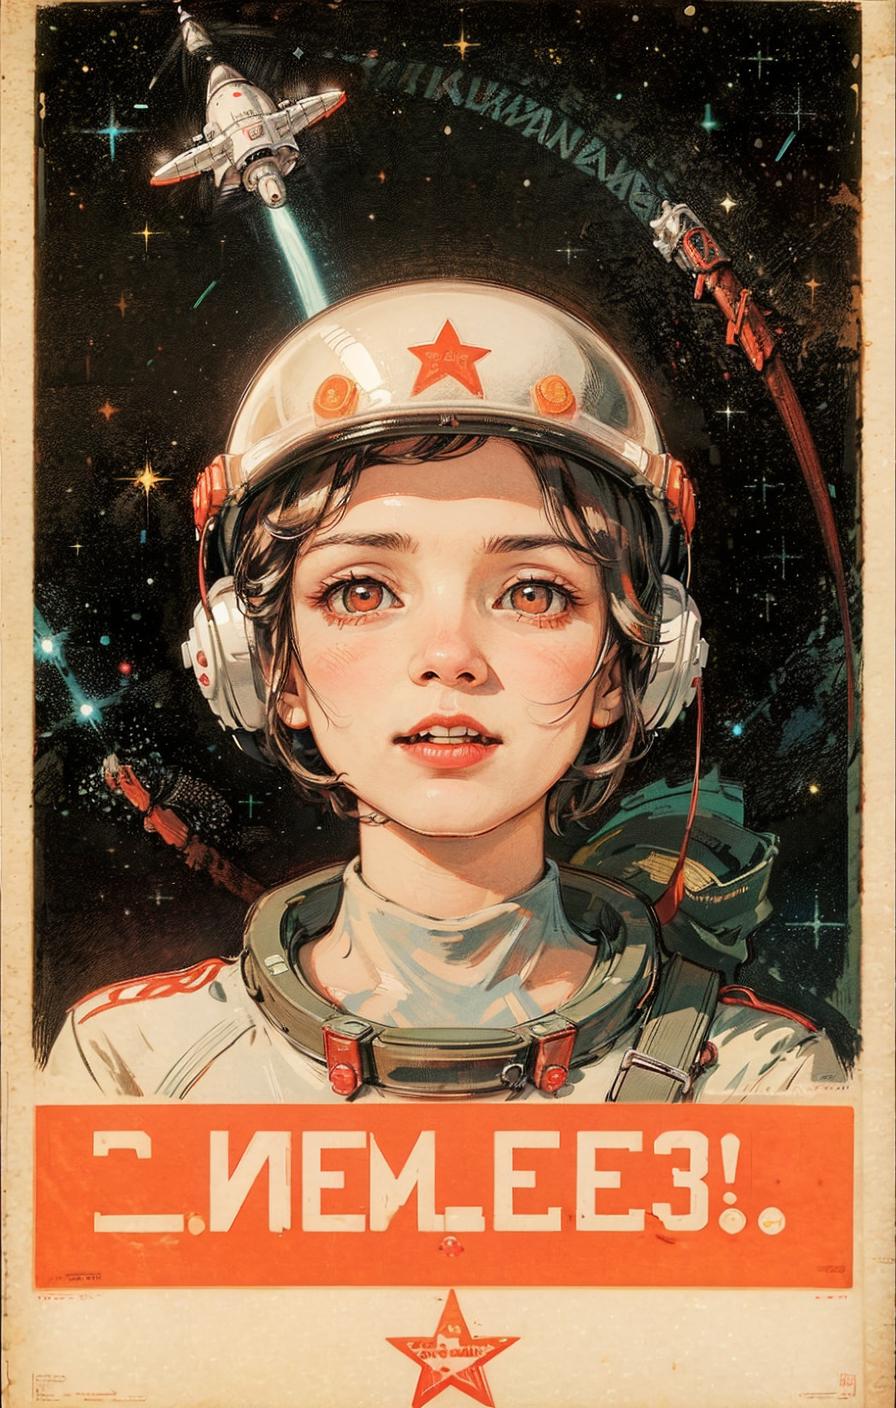 Astronaut Girl Space Art Print Poster with Headphones on Head